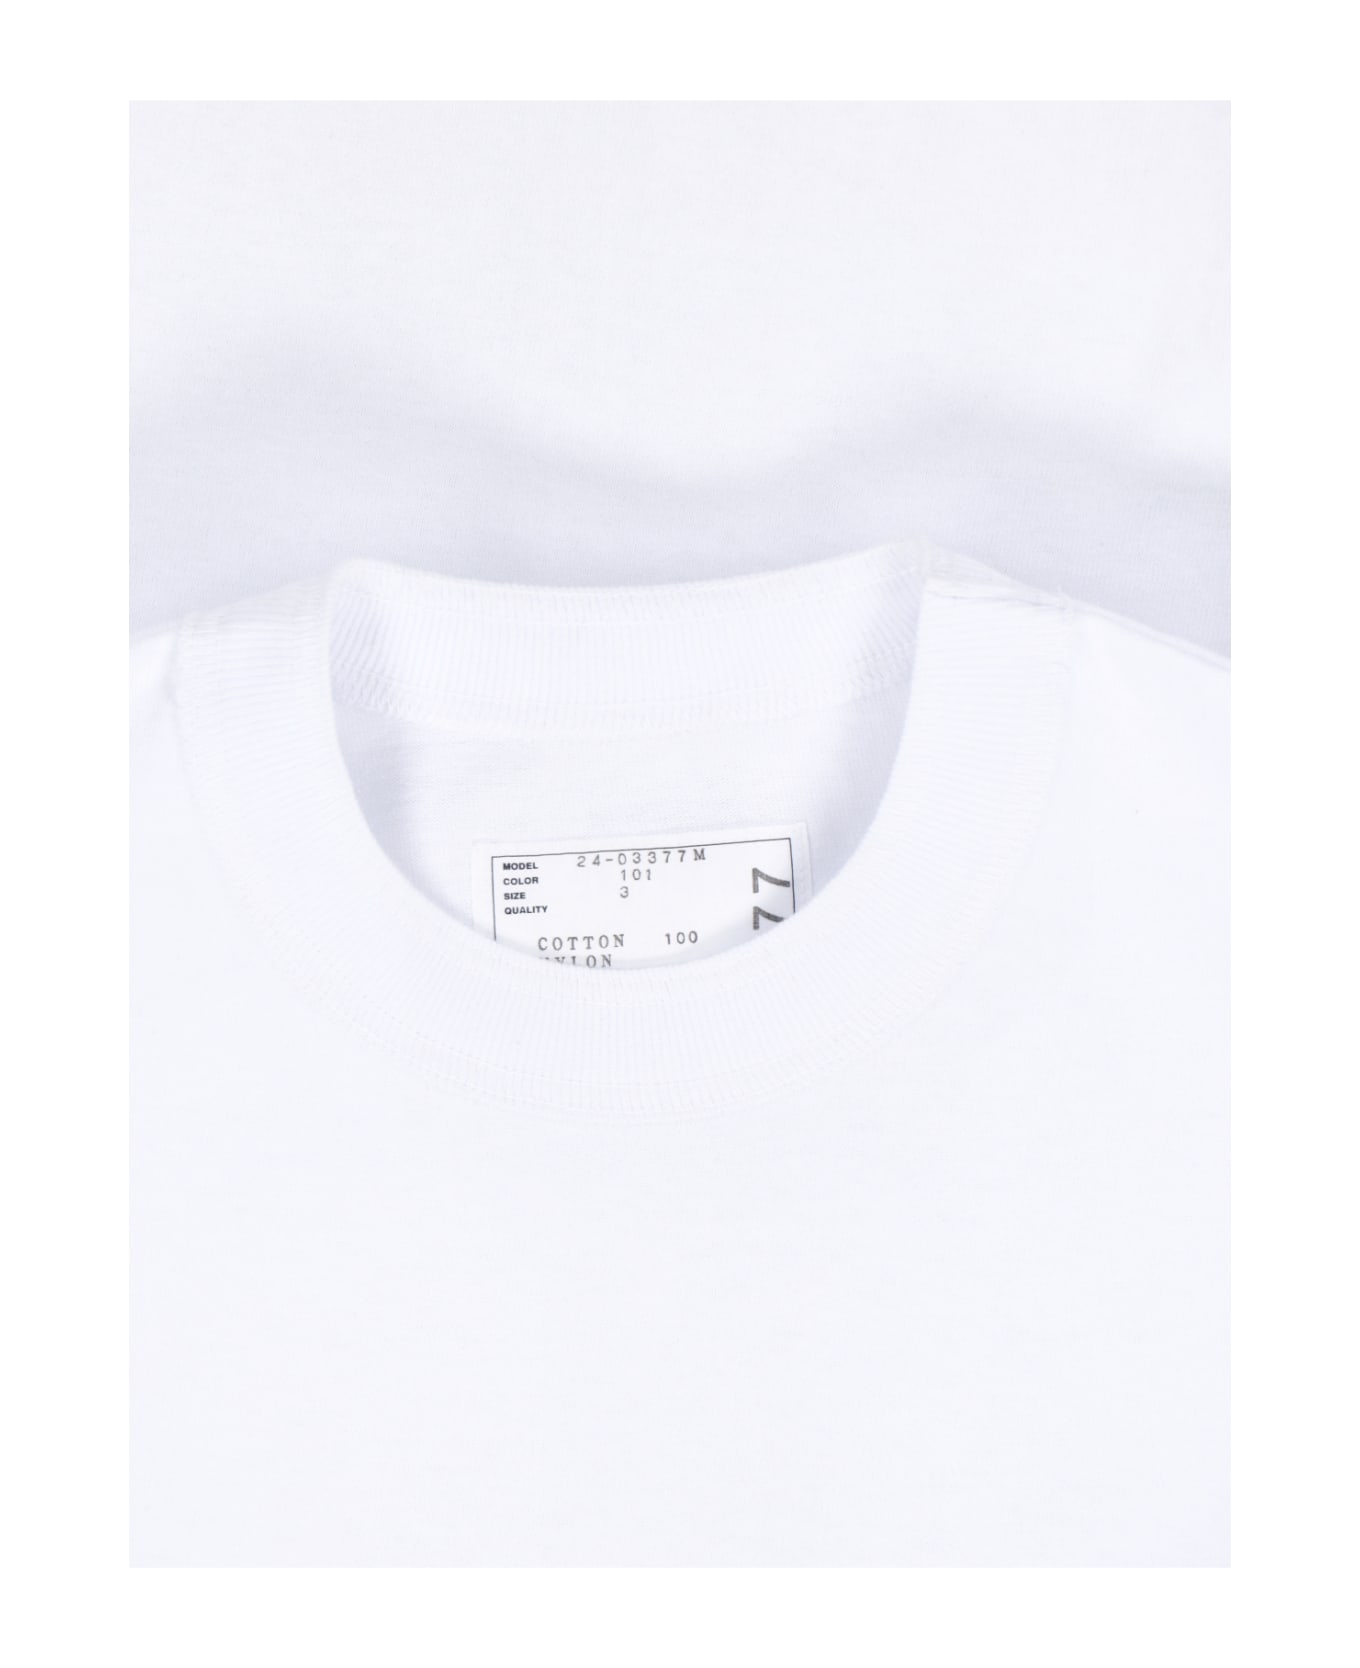 Sacai Zip Detail T-shirt - WHITE